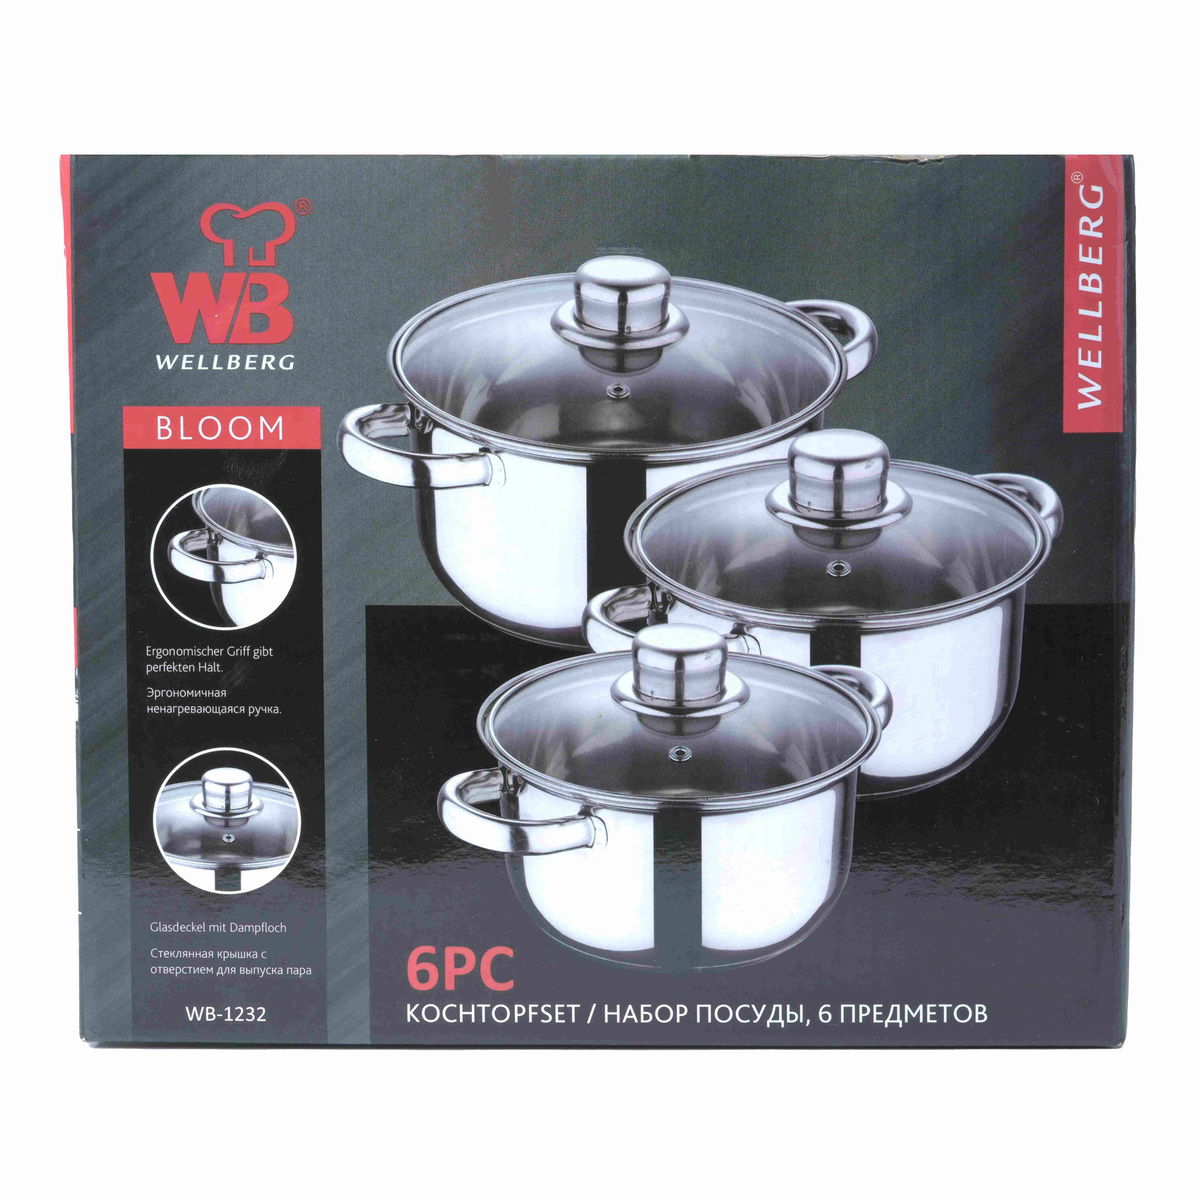 Wellberg Bloom Cookware Set, 6 pcs, Stainless Steel, 14 cm + 16 cm + 18 cm + Lids